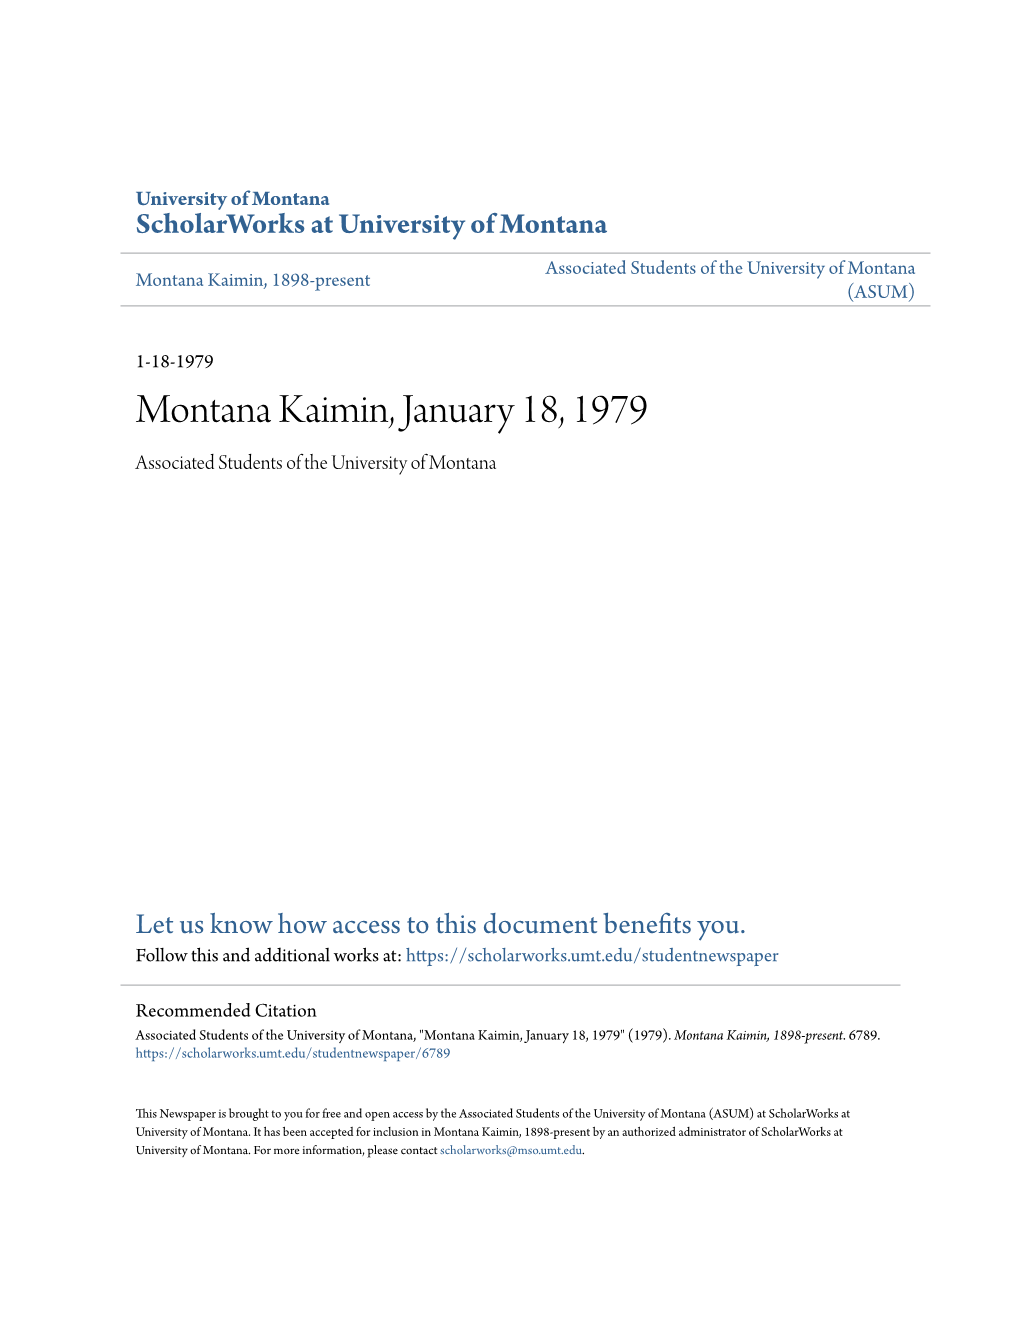 Montana Kaimin, January 18, 1979 Associated Students of the University of Montana